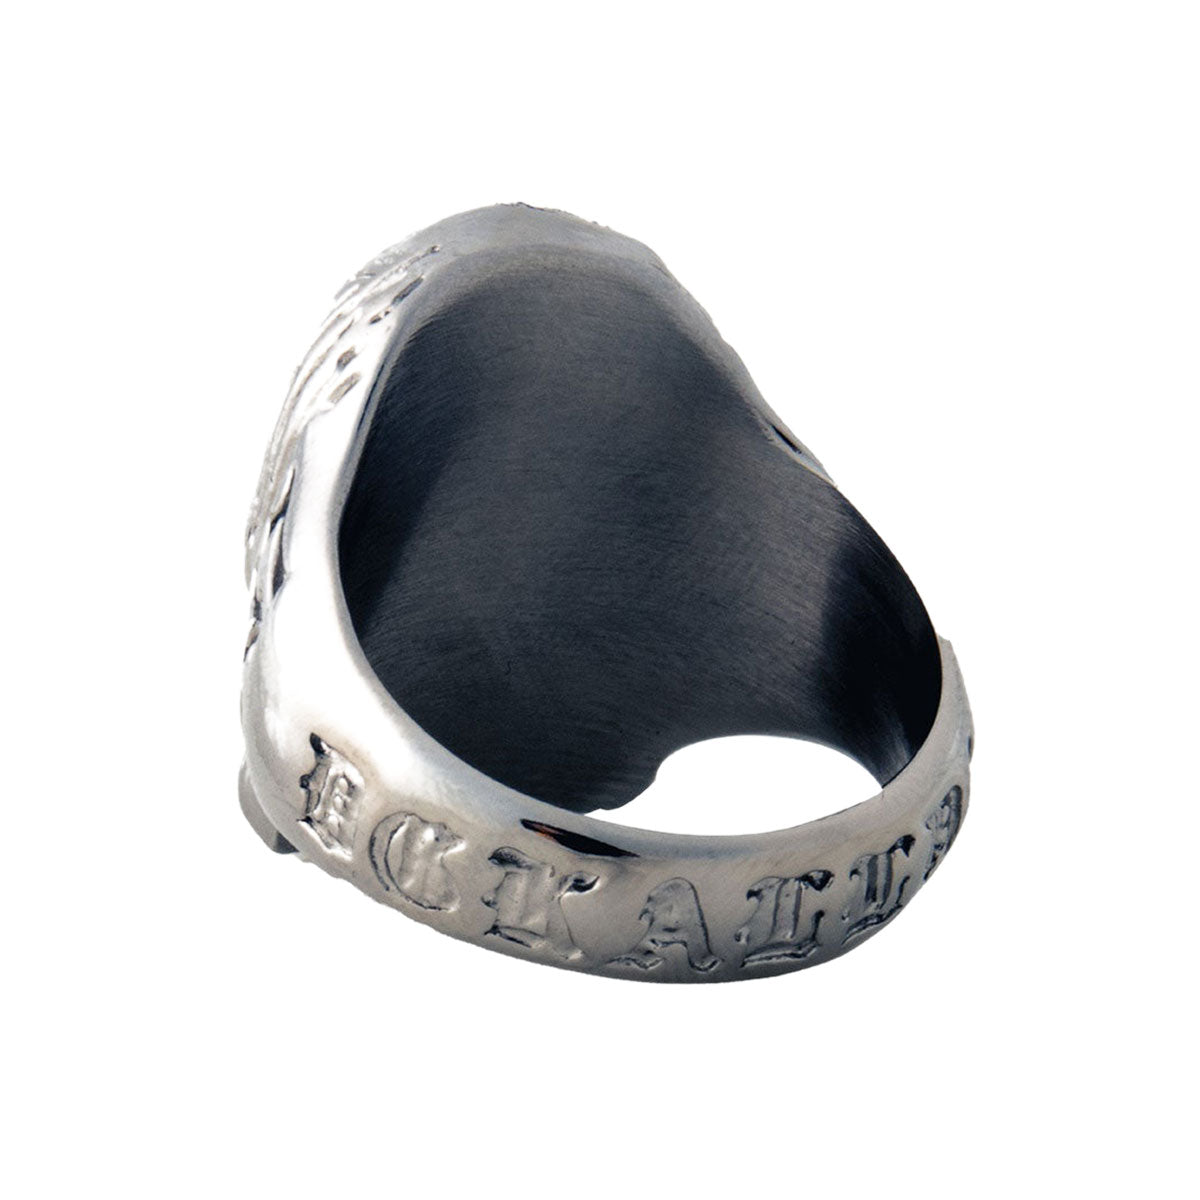 DGK Goon Ring - Silver image 2